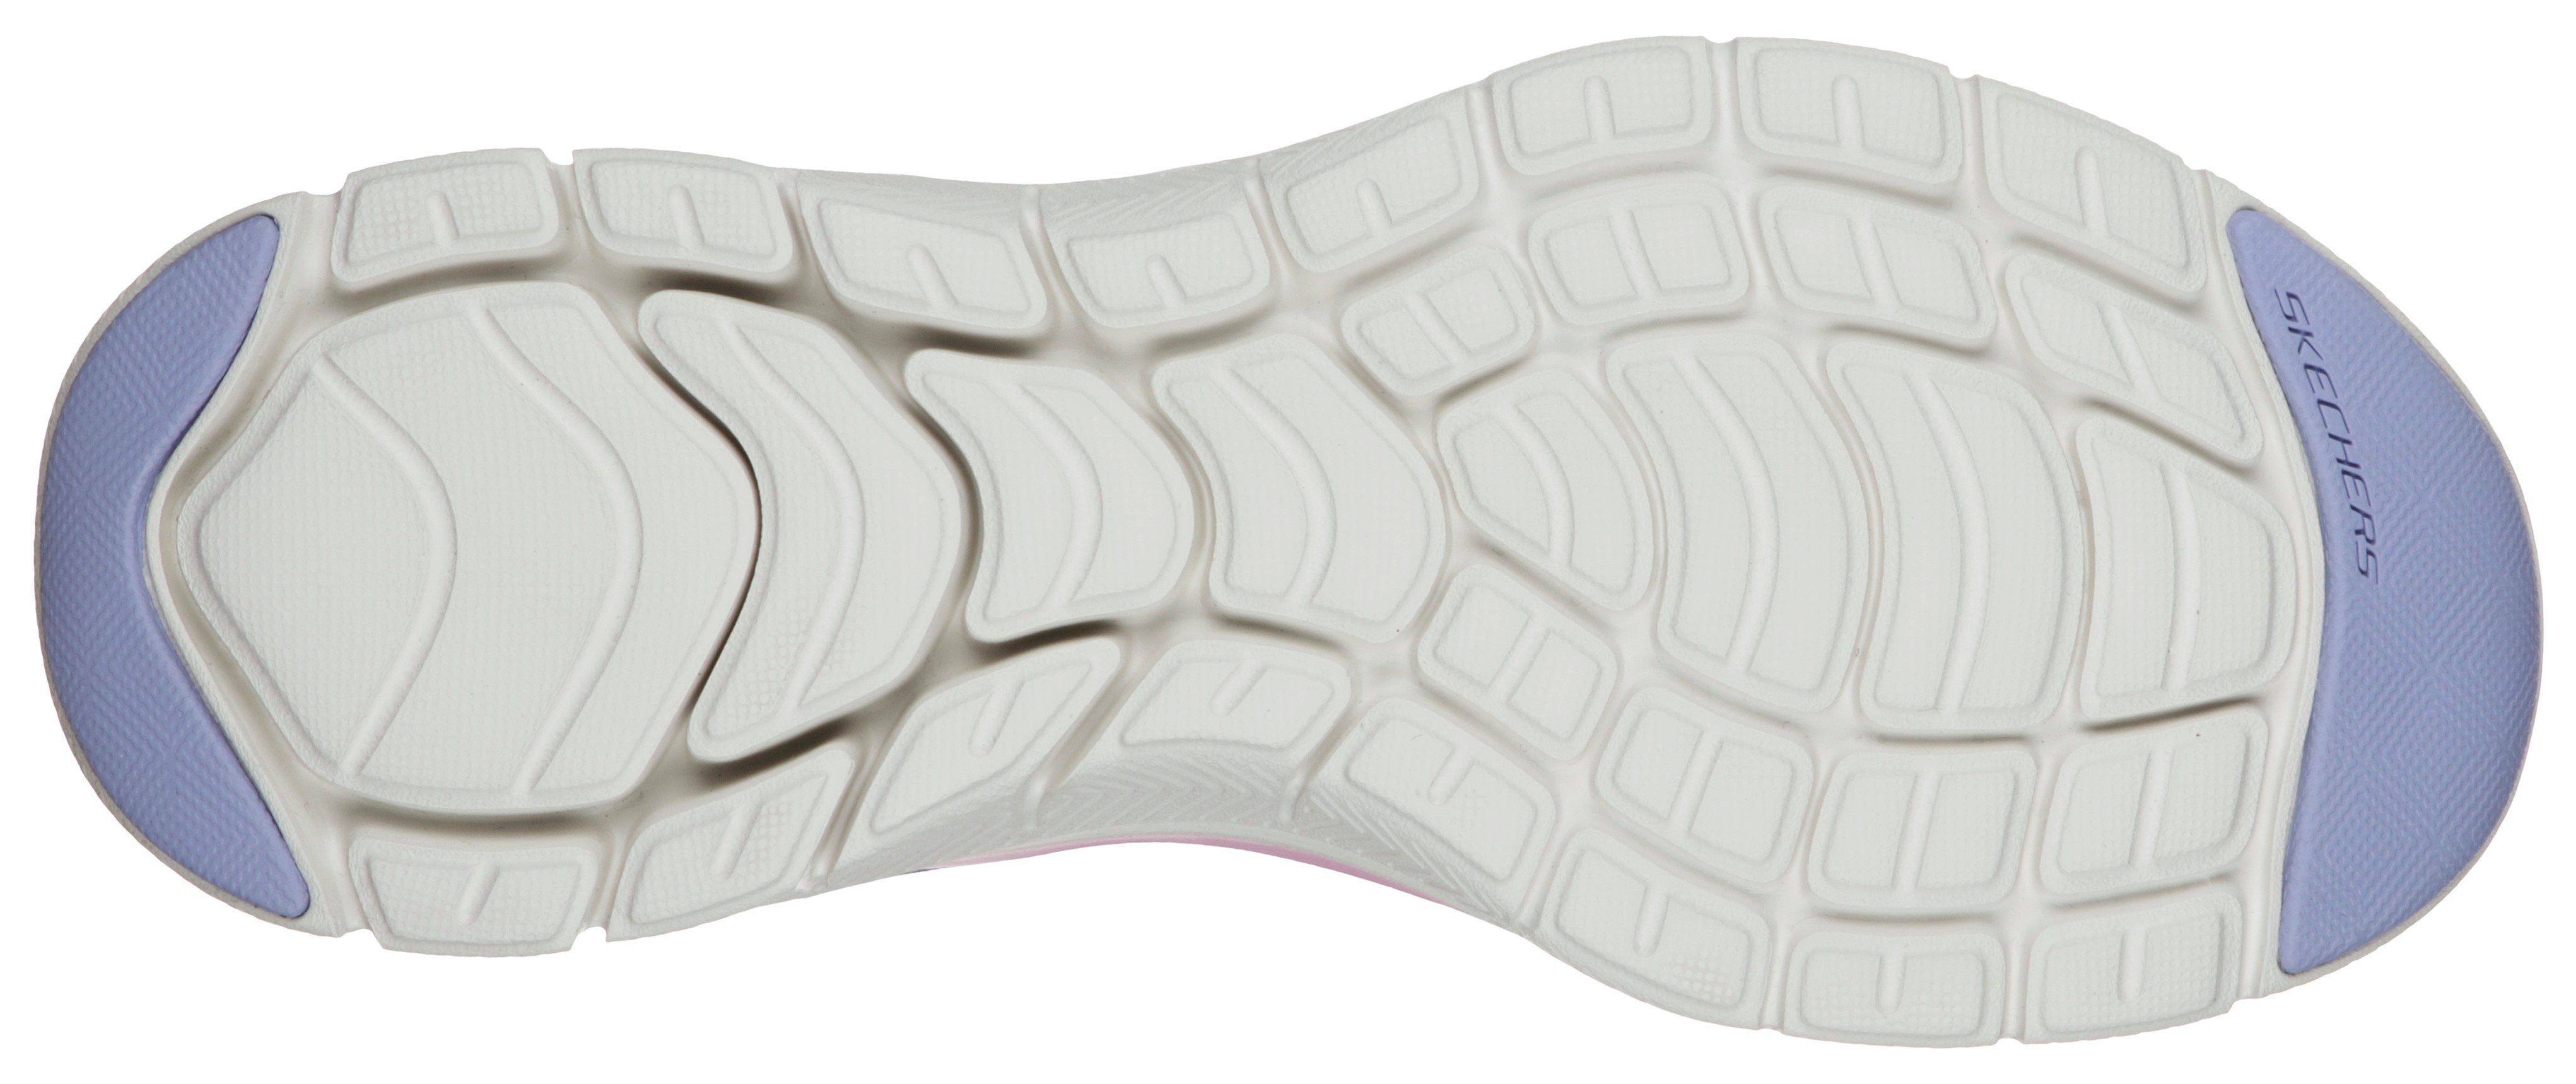 4.0 FLEX Skechers Cooled lavendel-rosa MOVE Air APEEAL mit FRESH Foam Sneaker Memory